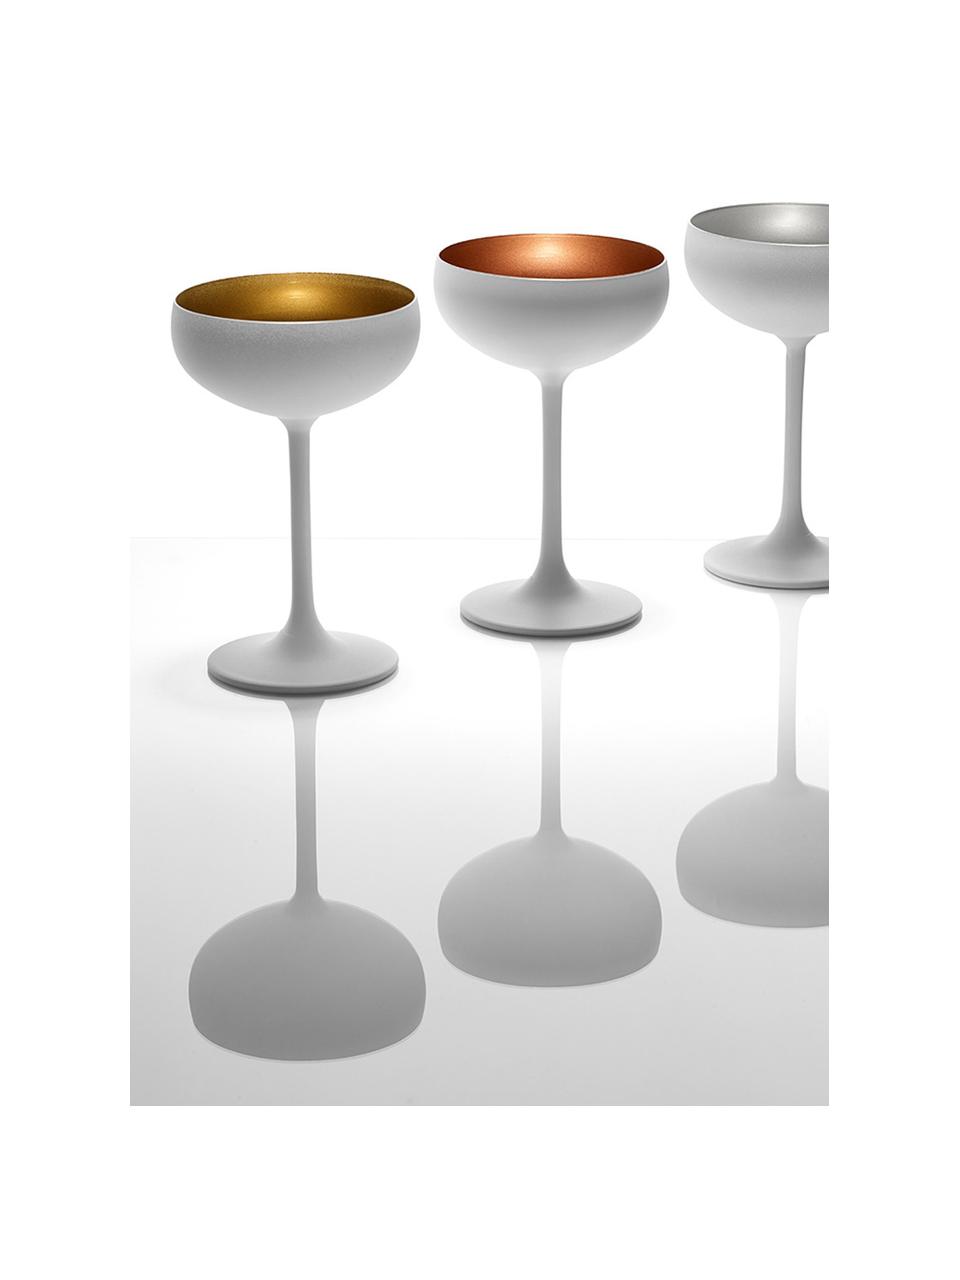 Kristall-Champagnerschalen Elements, 6 Stück, Kristallglas, beschichtet, Weiß, Goldfarben, Ø 10 x H 15 cm, 230 ml